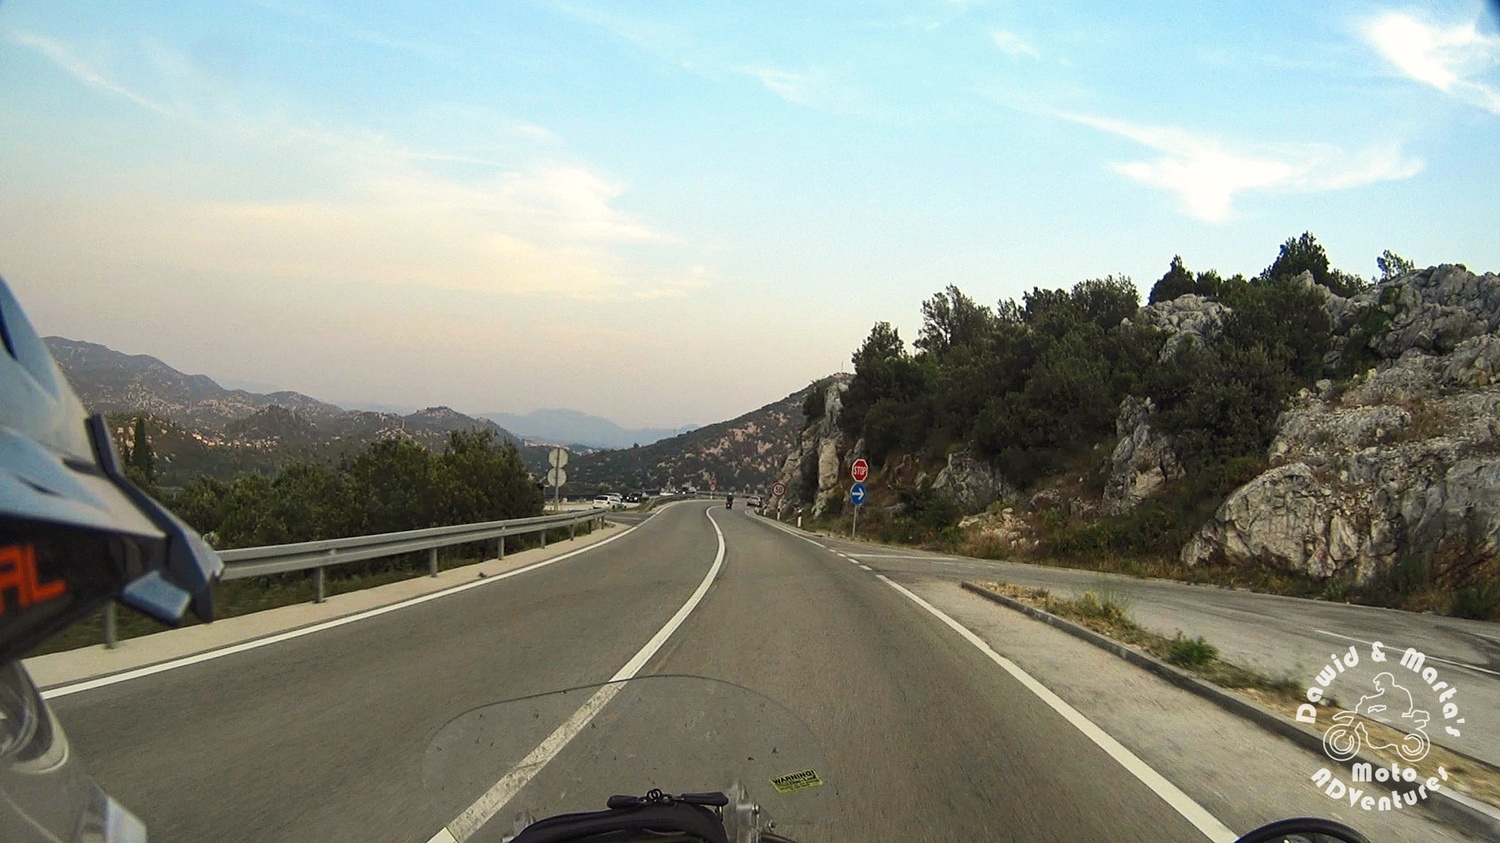 Adriatic Highway to Neretva River delta